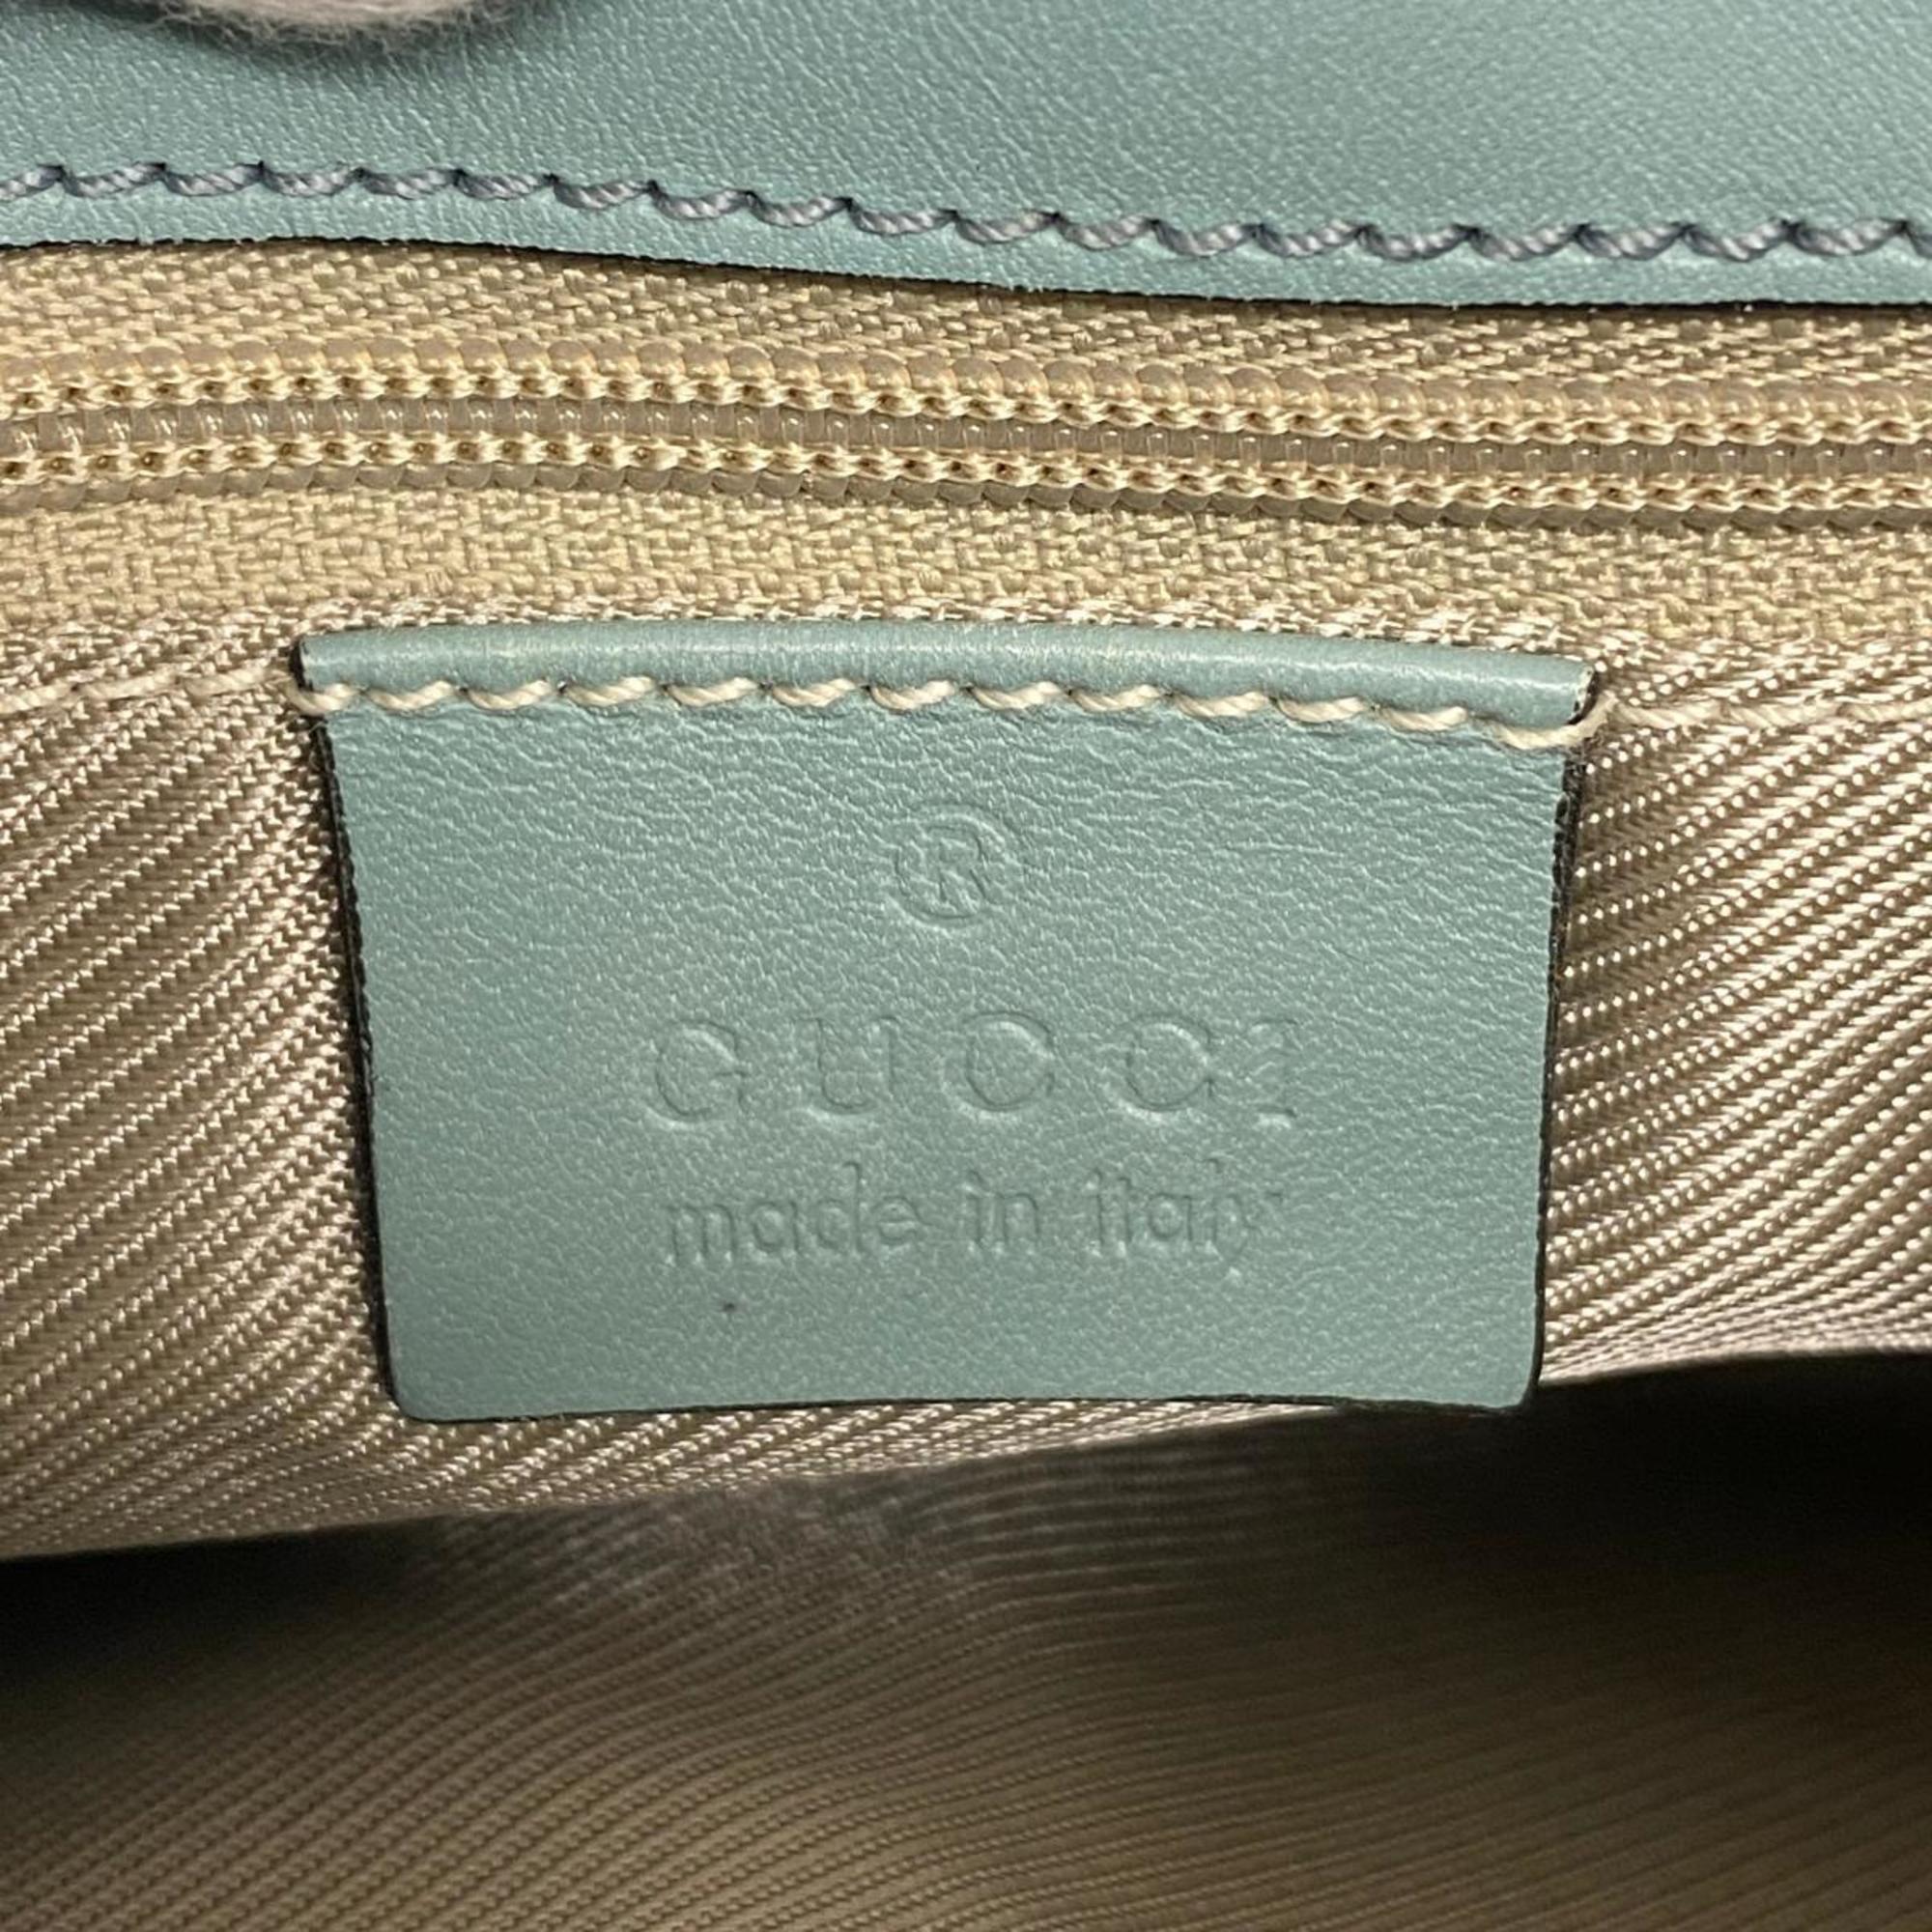 Gucci handbag 0014057 suede leather blue ladies